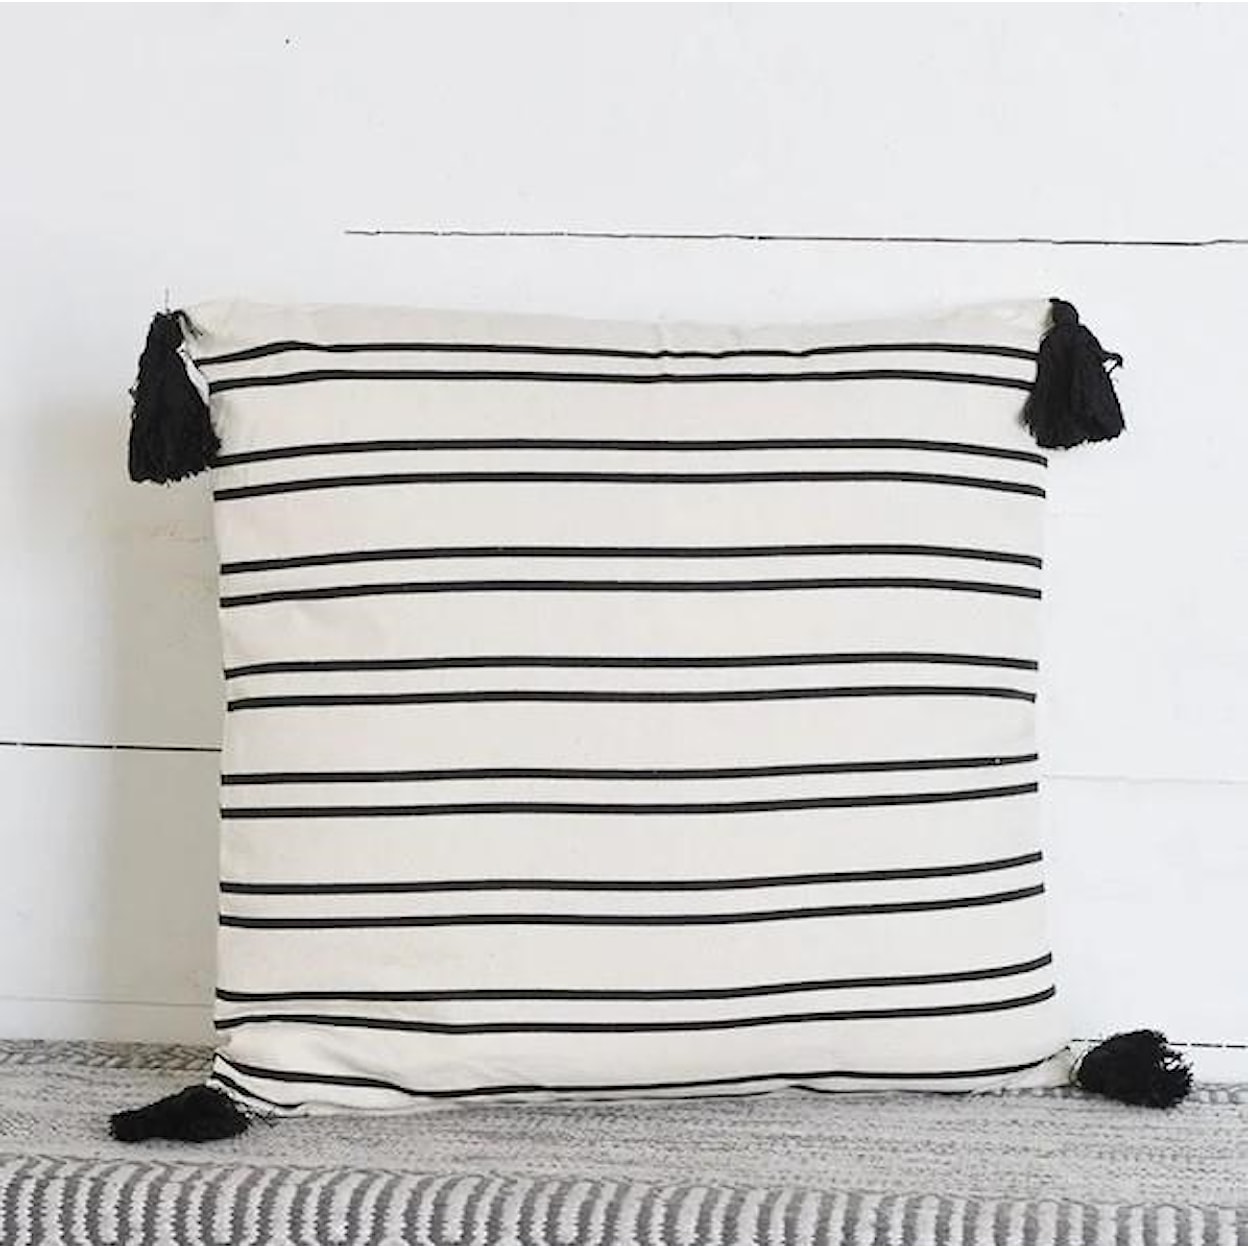 PD Home & Garden Accent Pillows 18" Black/White Stripe Pillow